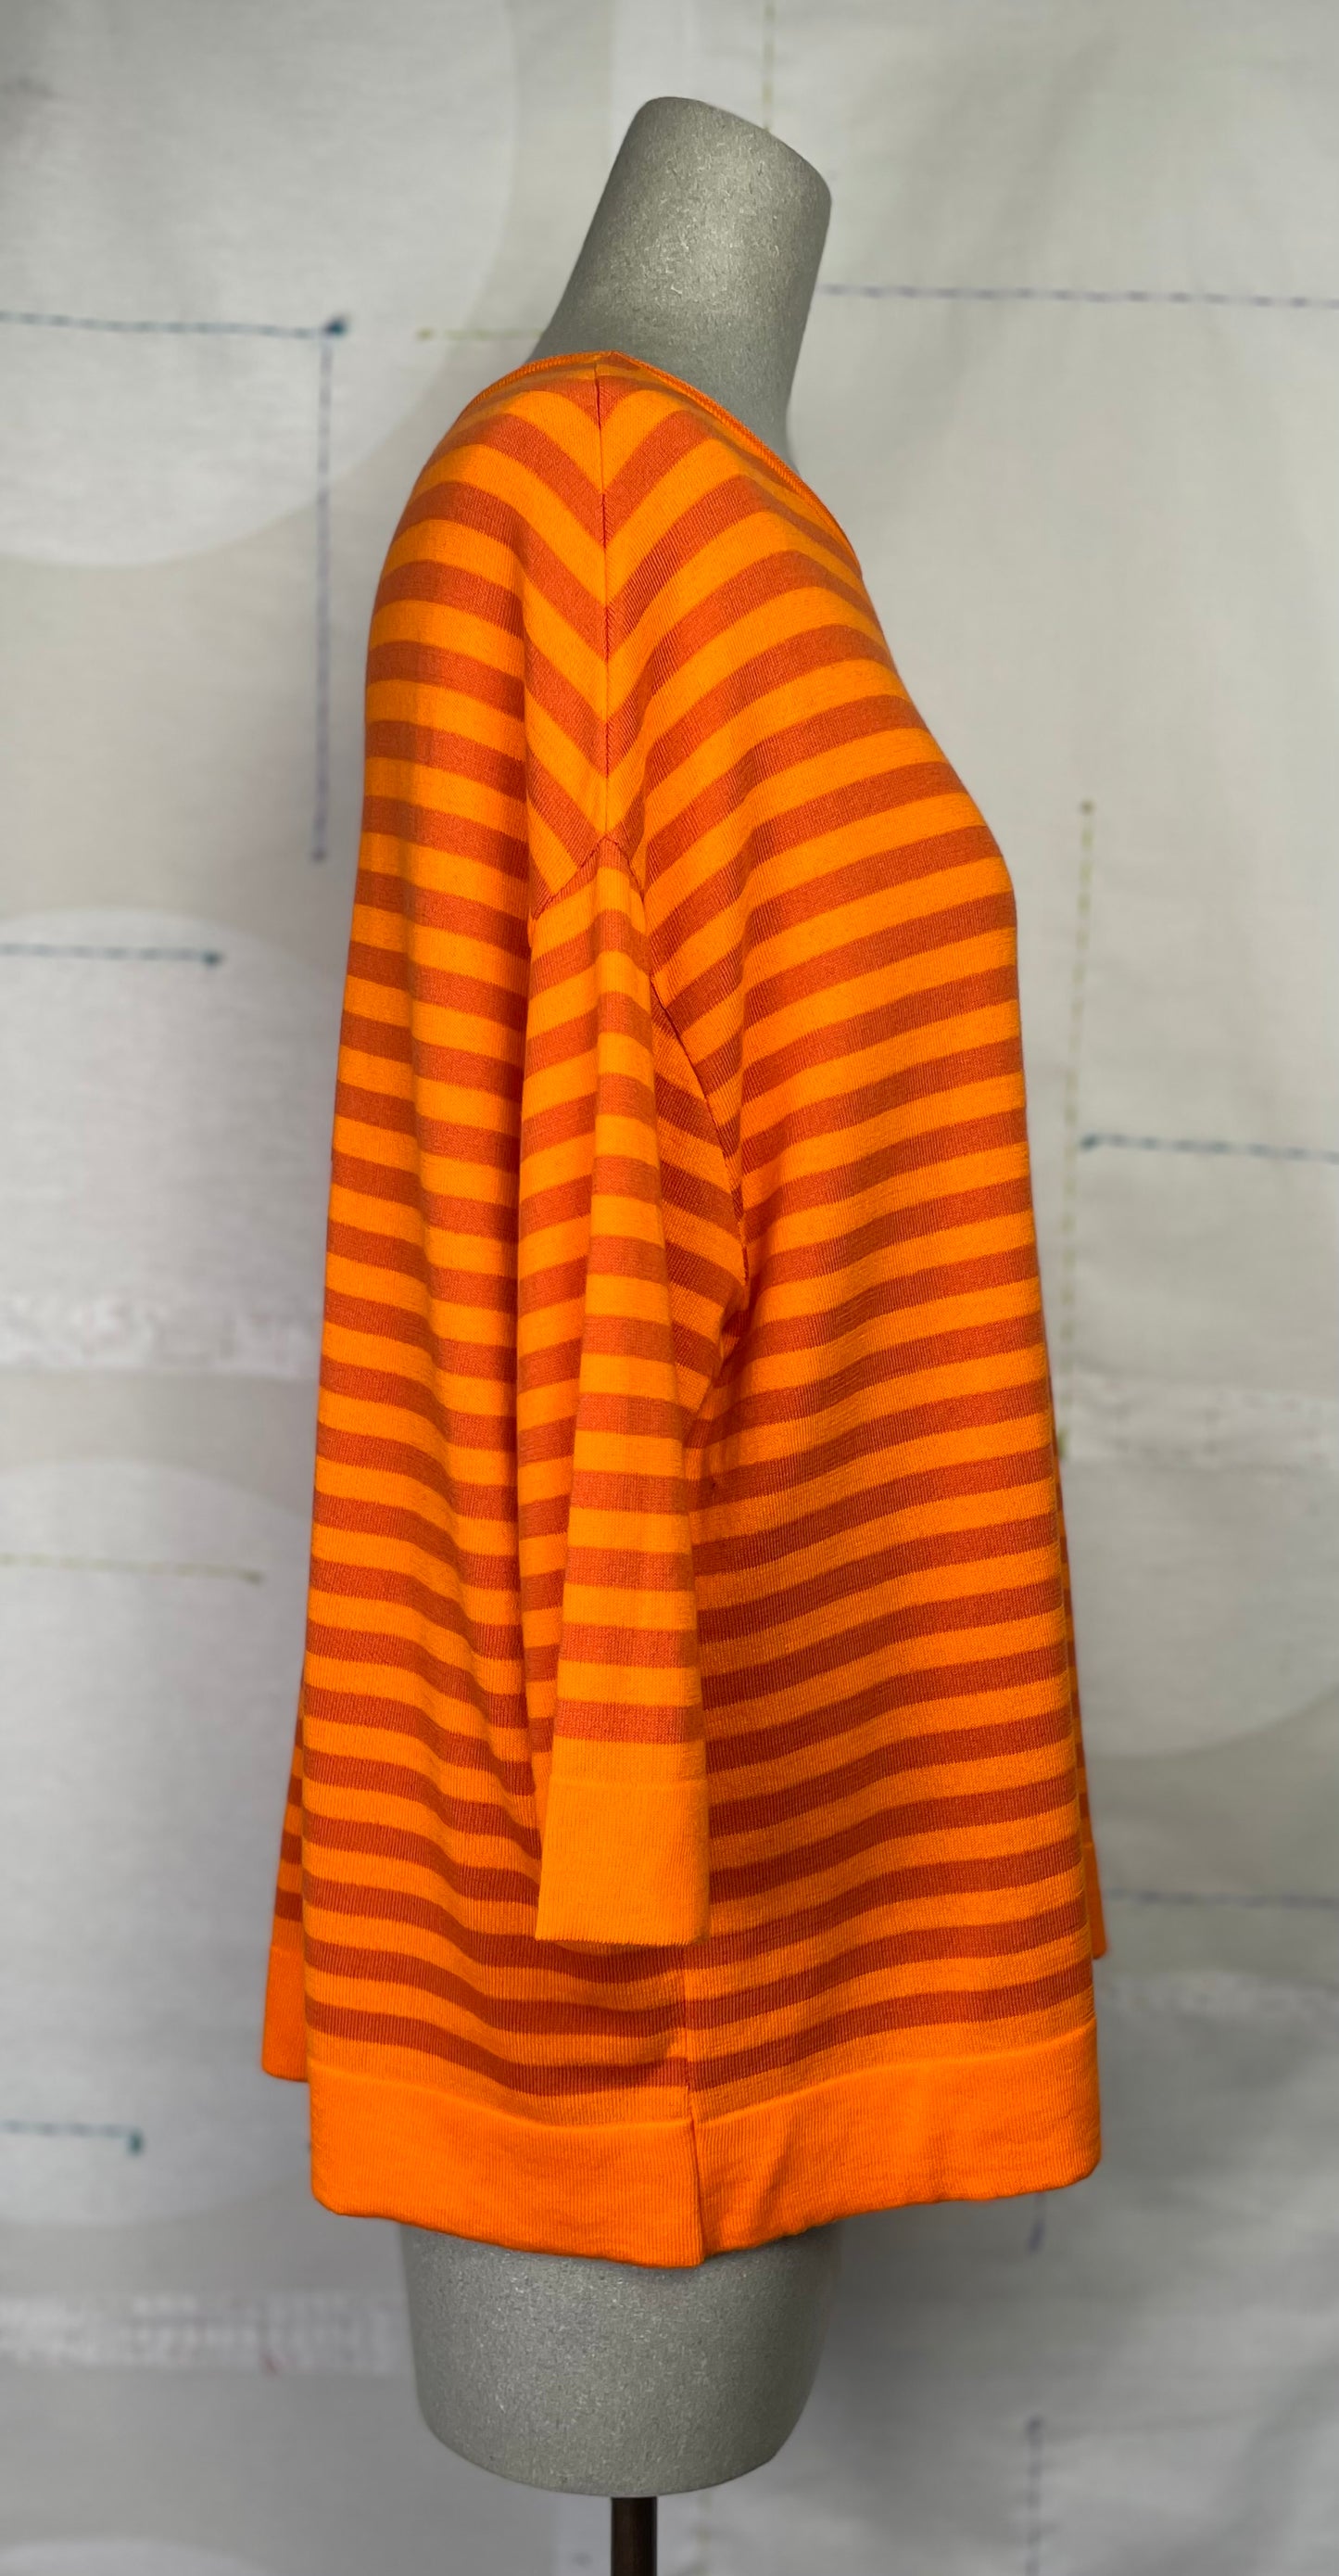 KnitKnit  ~  3/4 Sleeve Striped Sweater - Mattone/Arancio